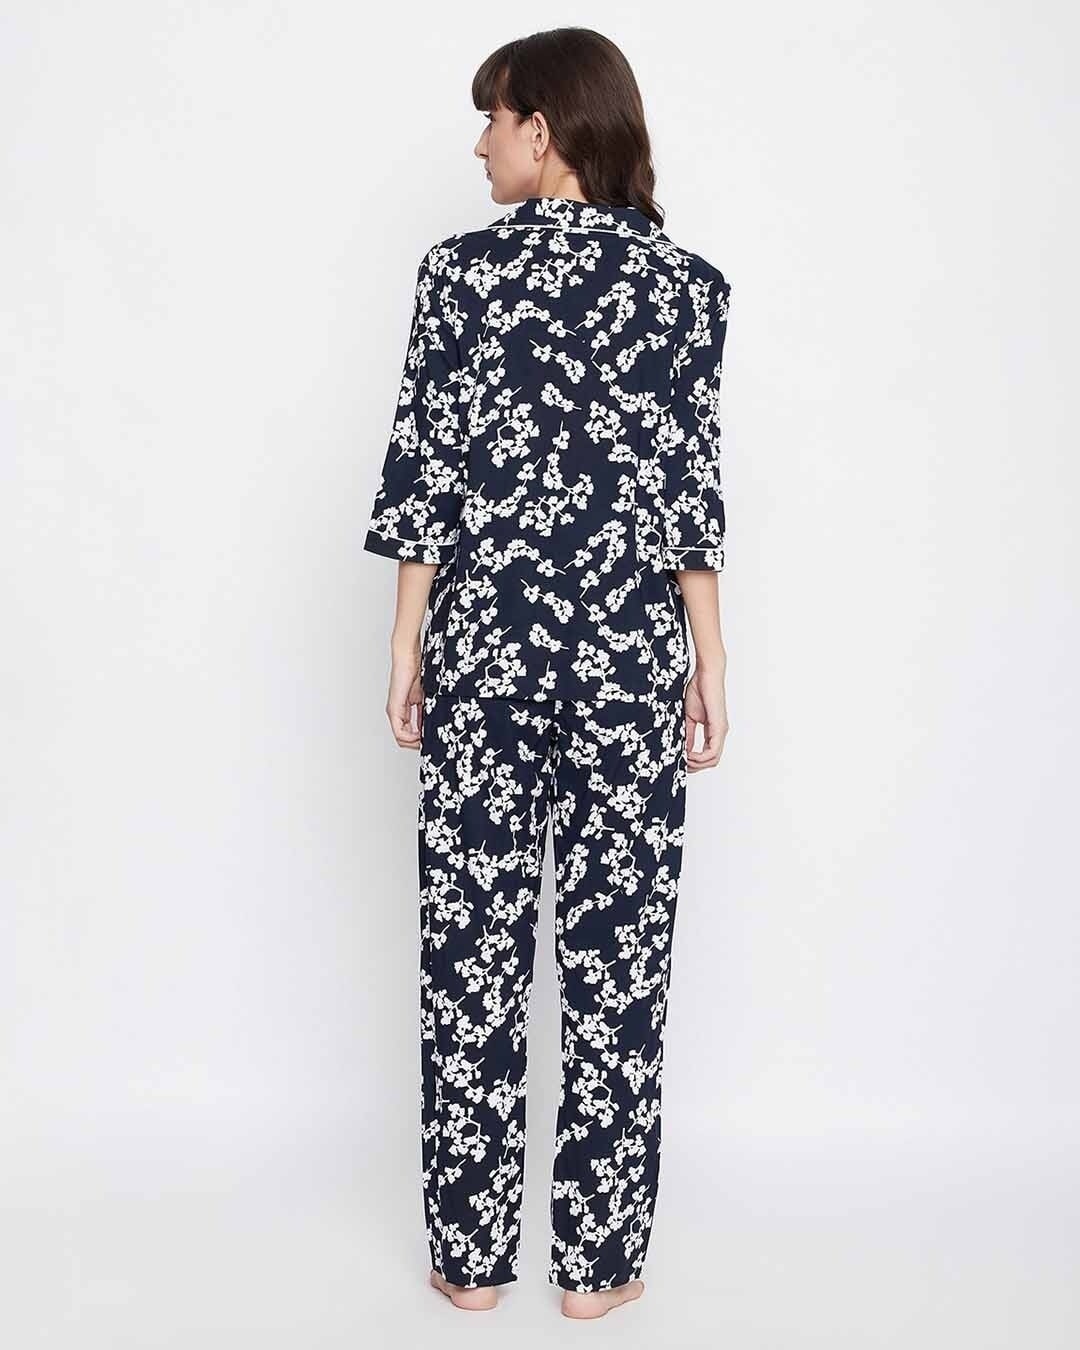 Shop Women's Black Printed Top & Pyjama Set (Pack of 2)